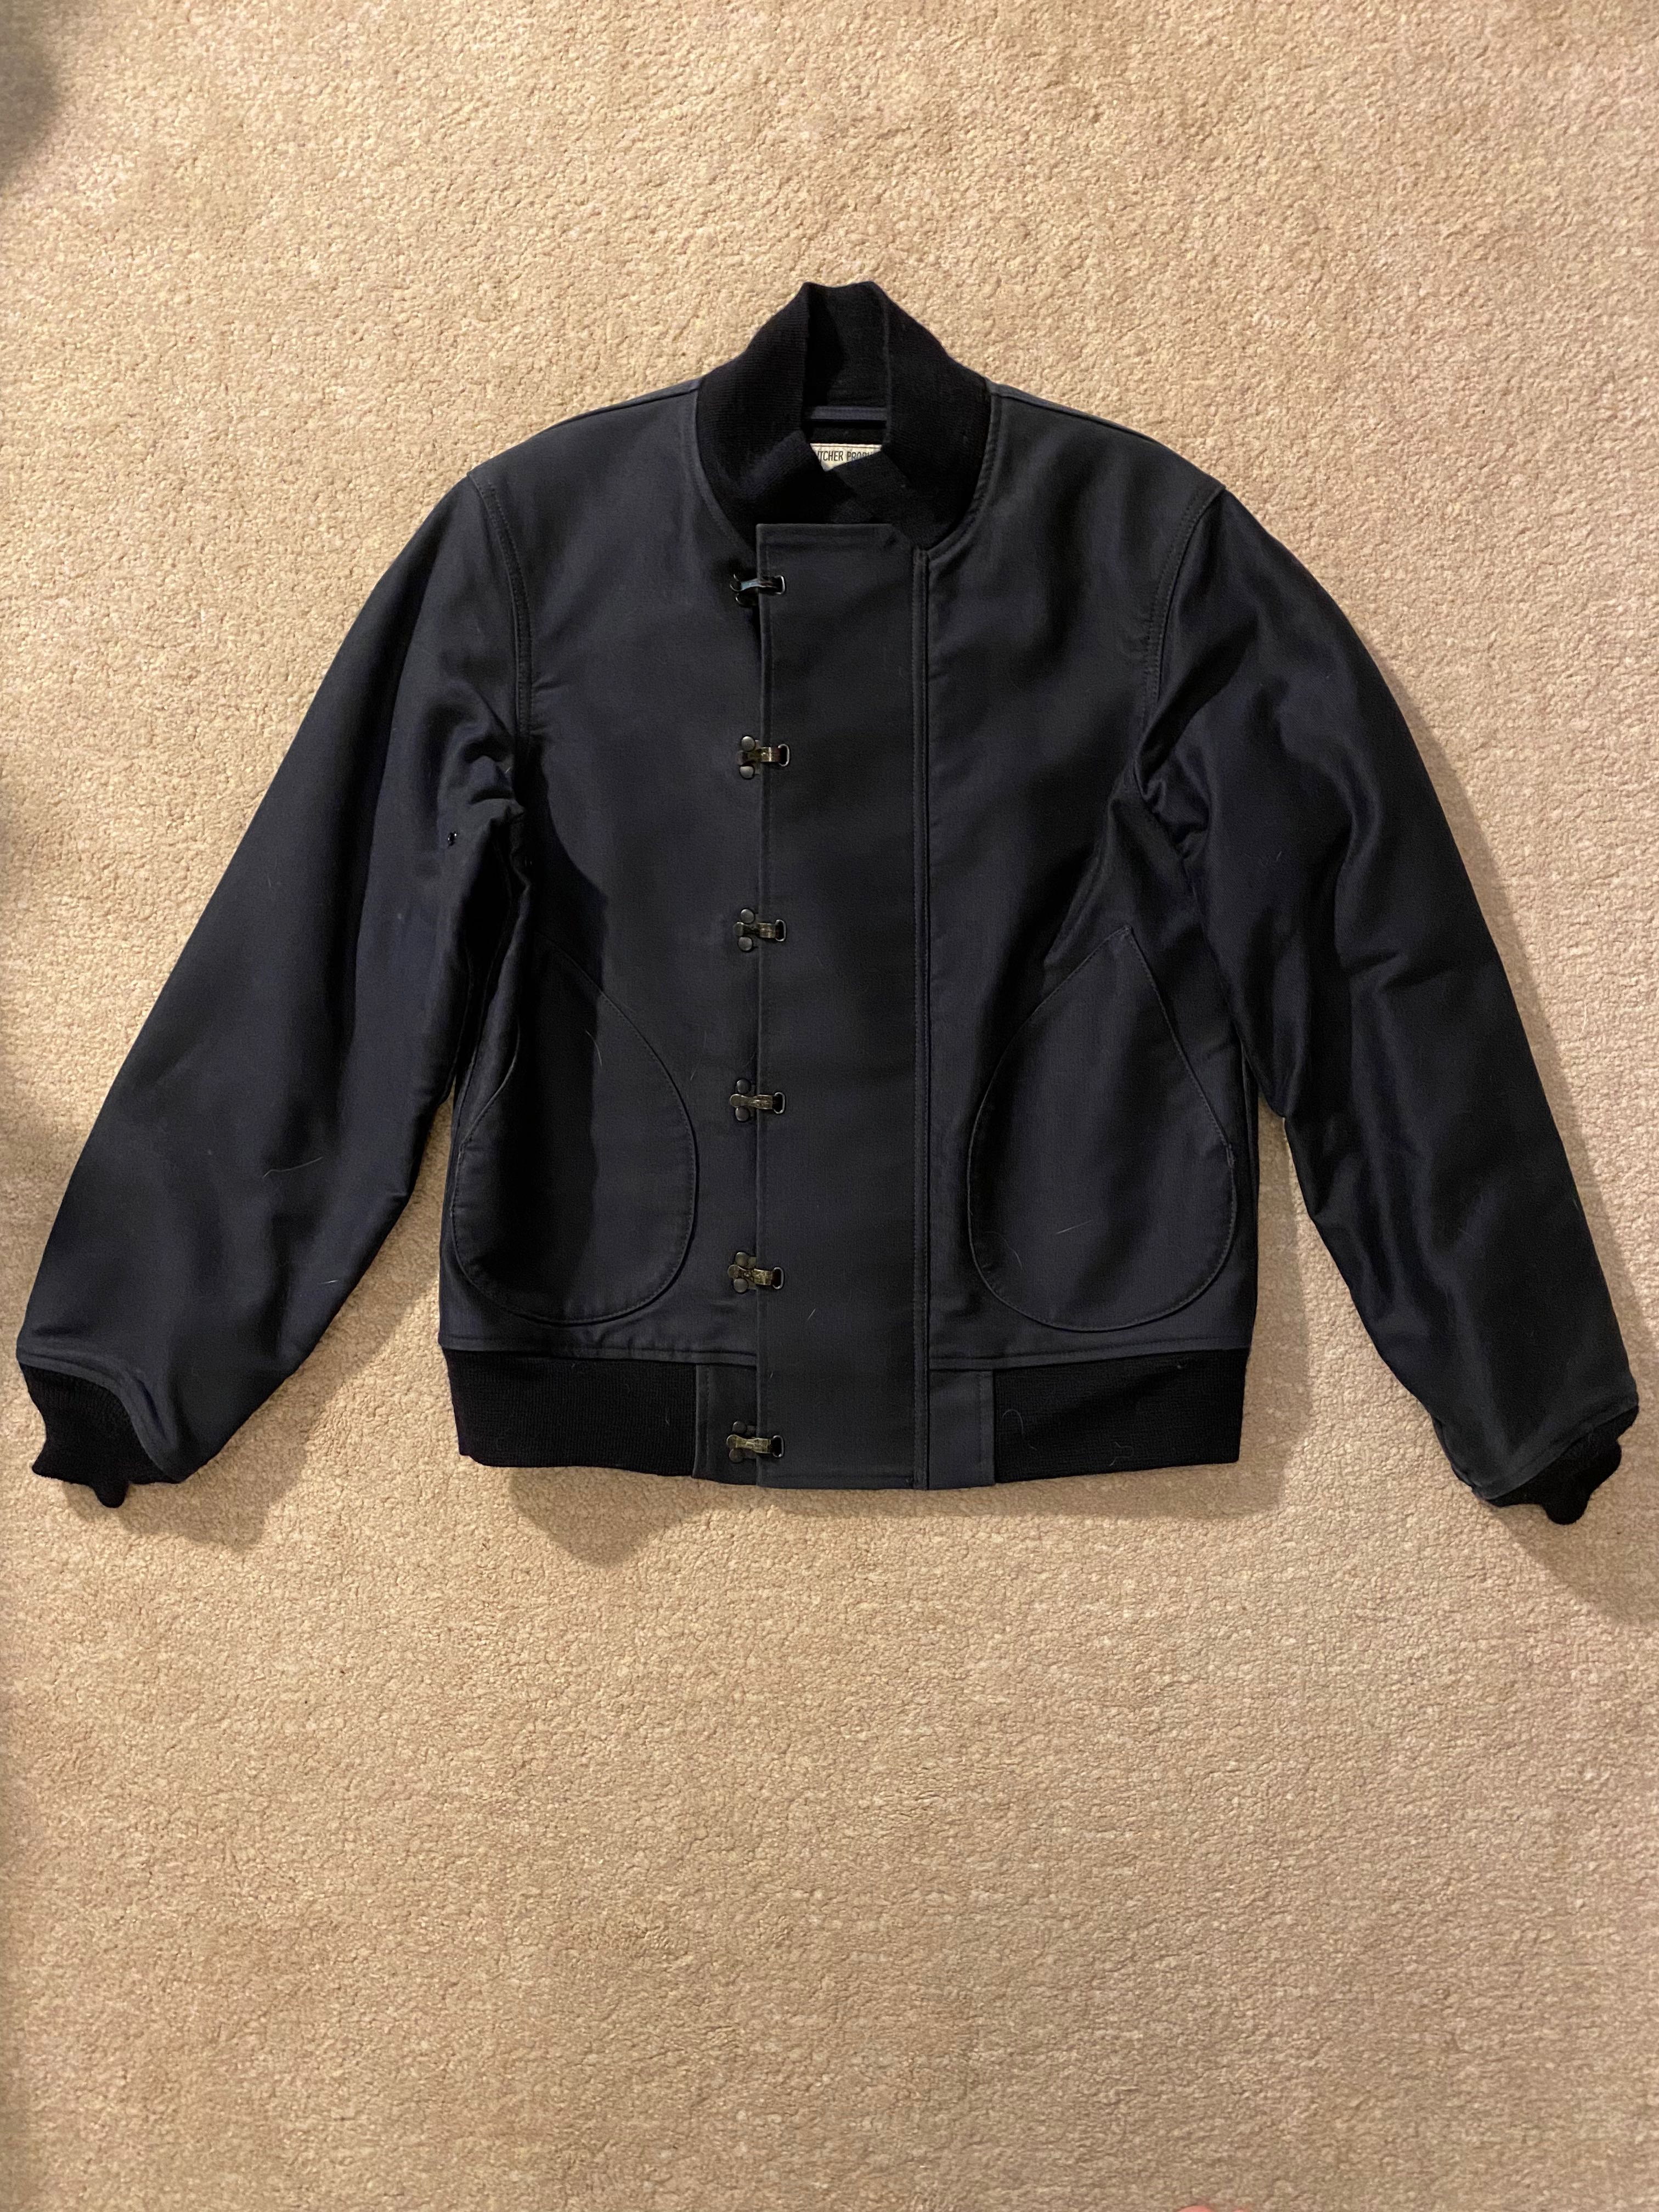 Timeworn clothing Butcher Products USN Deck Jacket sz40, 男裝 